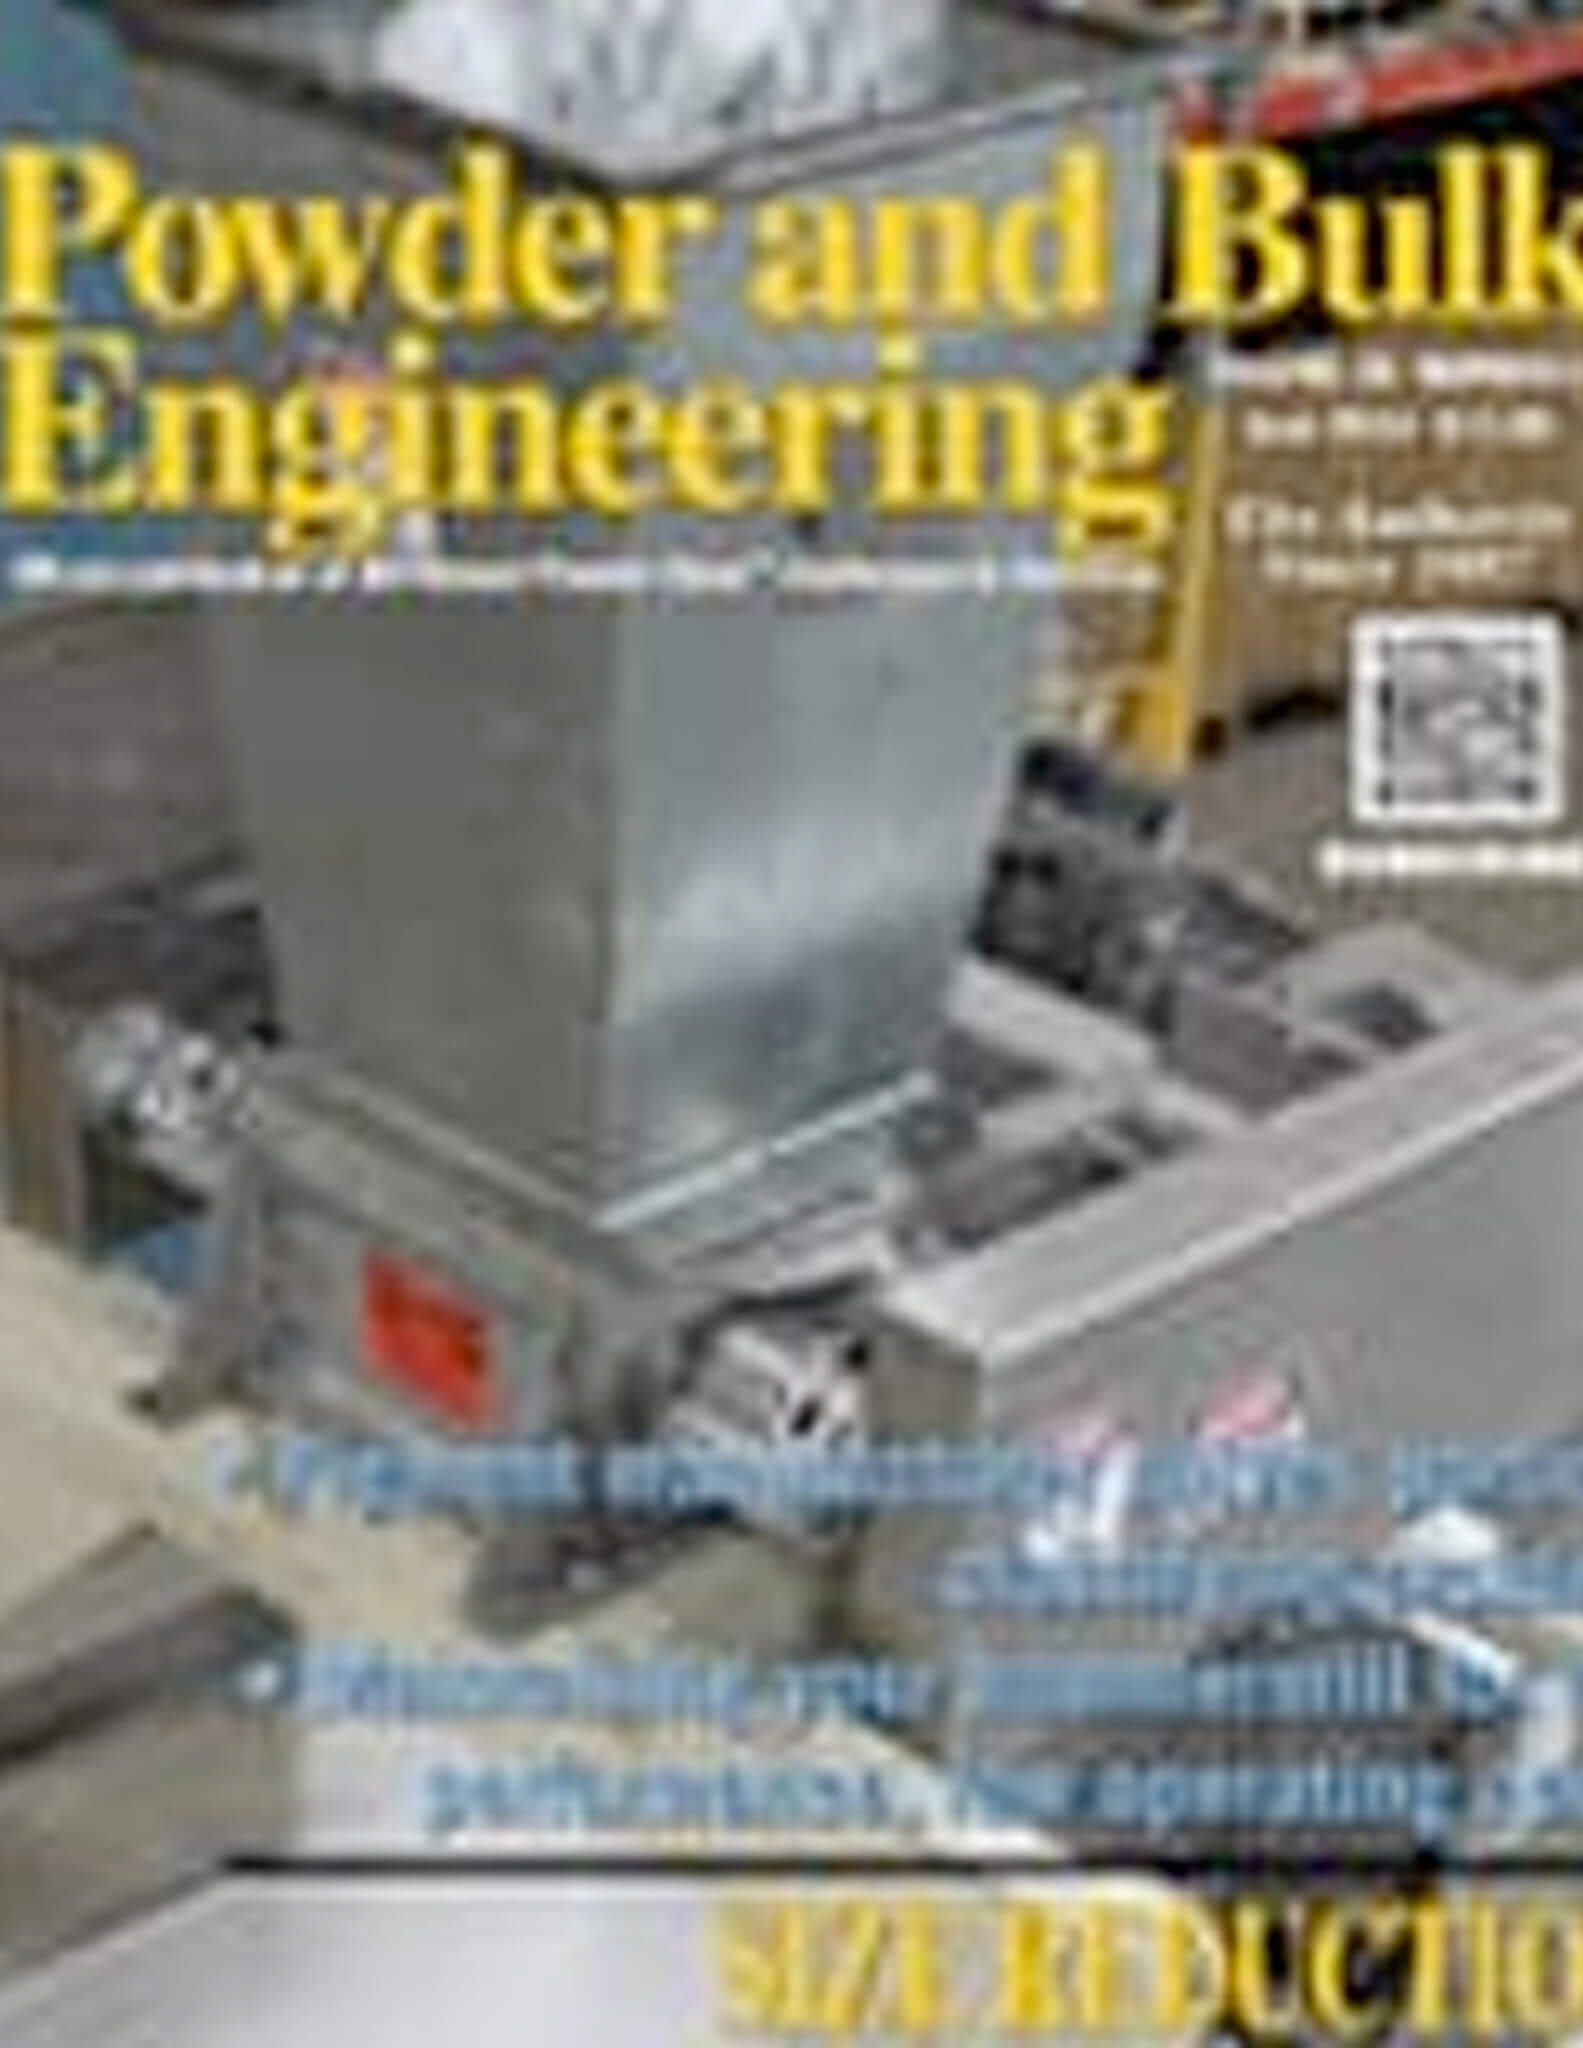 Powder and Bulk Engineering